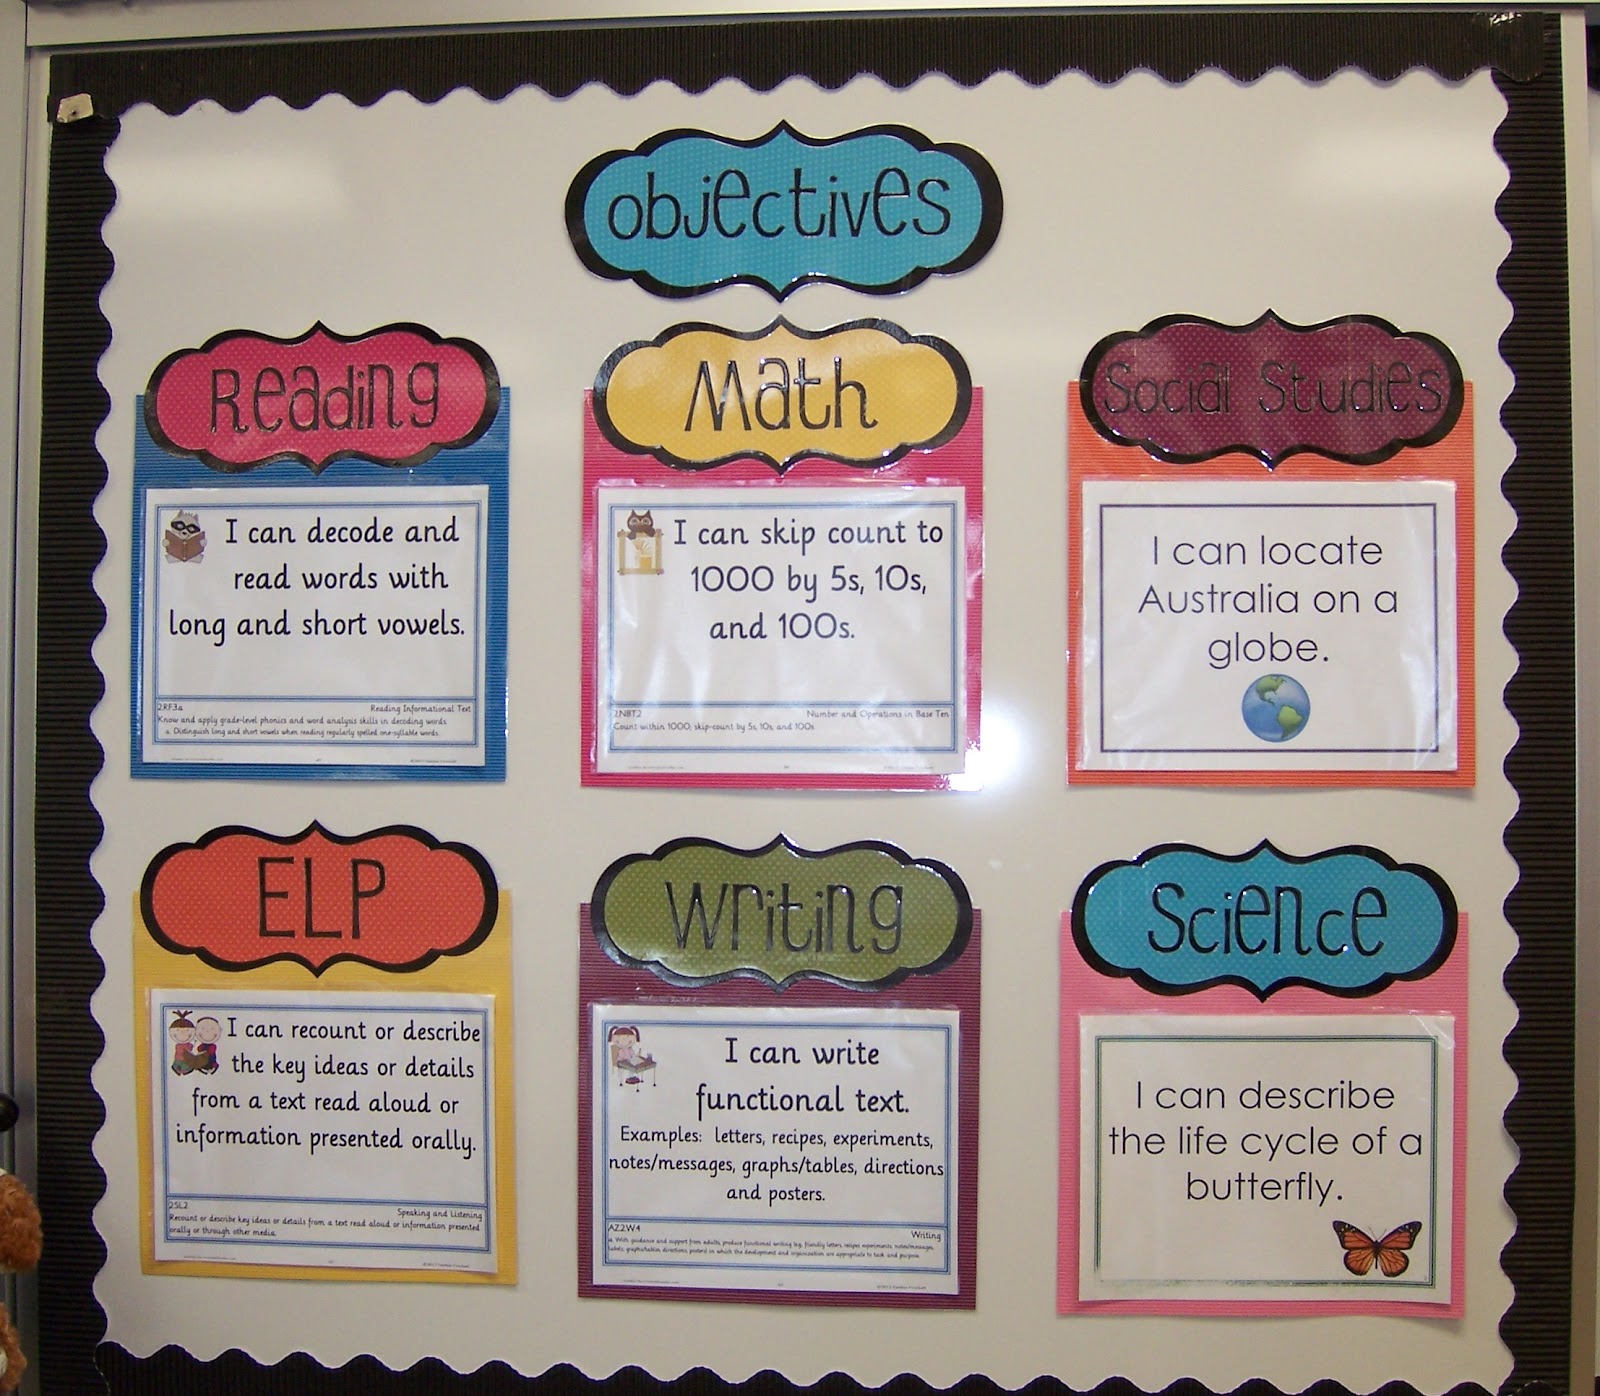 Objectives Bulletin Board from Learning in Wonderland